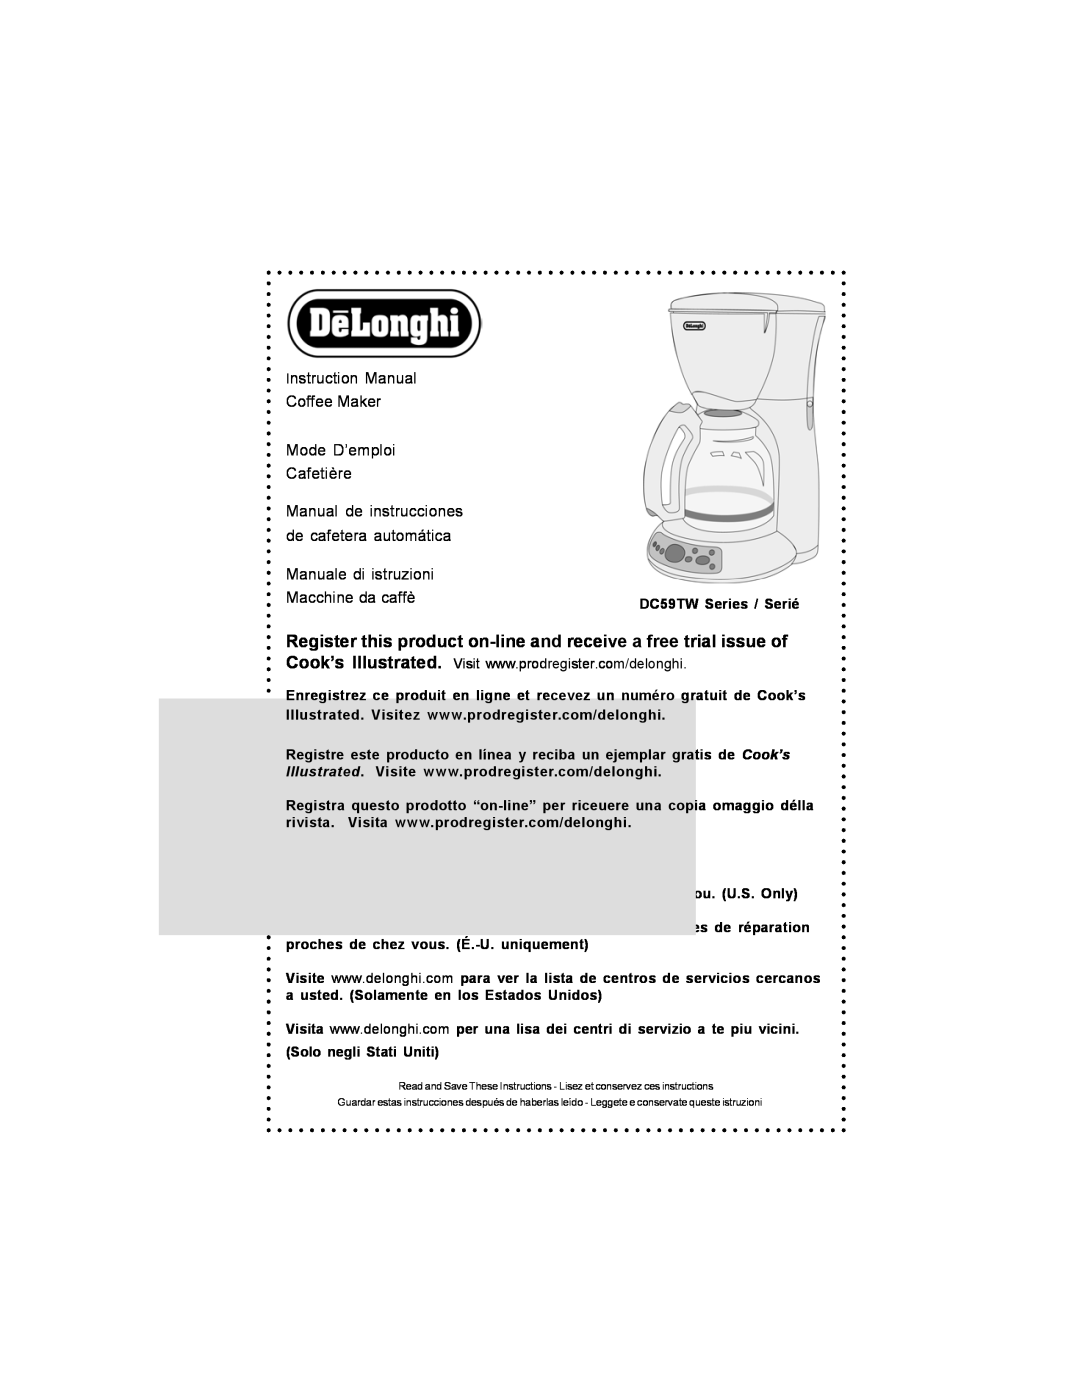 DeLonghi DC59TW instruction manual Coffee Maker, Mode D’emploi, Cafetière, Manual de instrucciones, de cafetera automática 